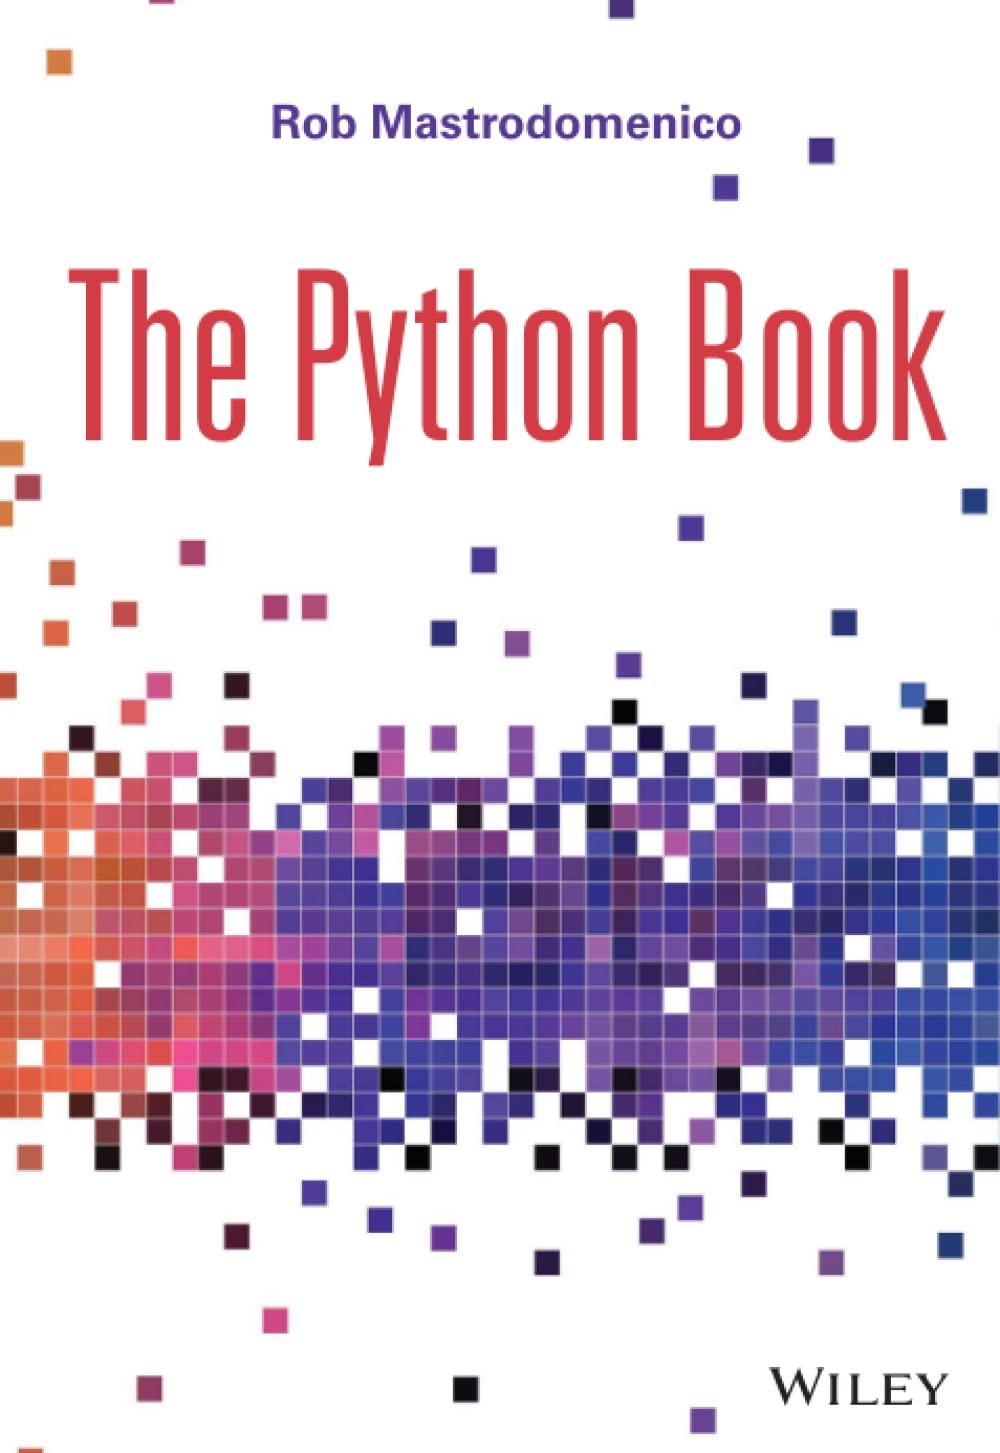 the python book 1st edition rob mastrodomenico 1119573319, 978-1119573319